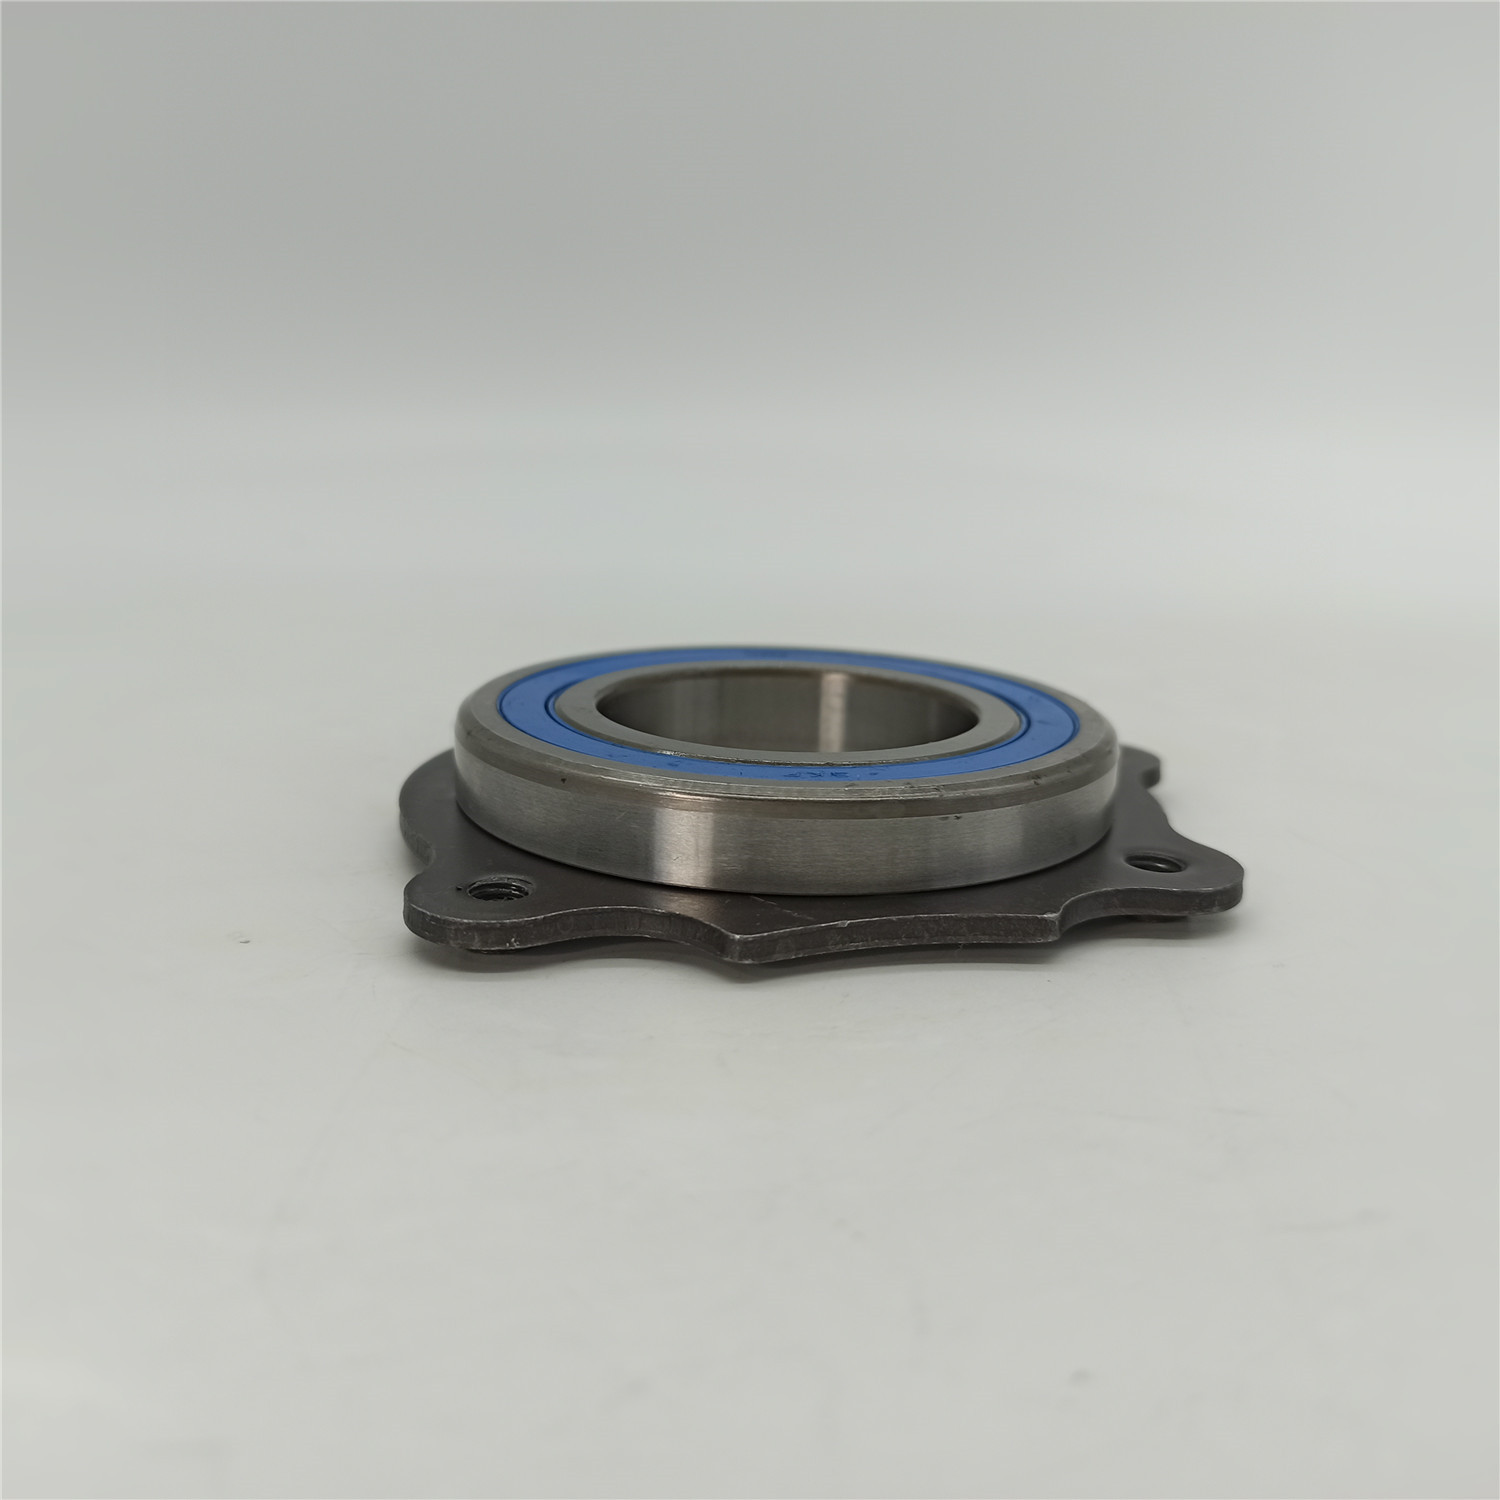 ZC-0058-OEM Automatic Transmission bearing SKF PHBC-B033 AC Deep Groove Ball Bearing 42*73.5*10/13mm